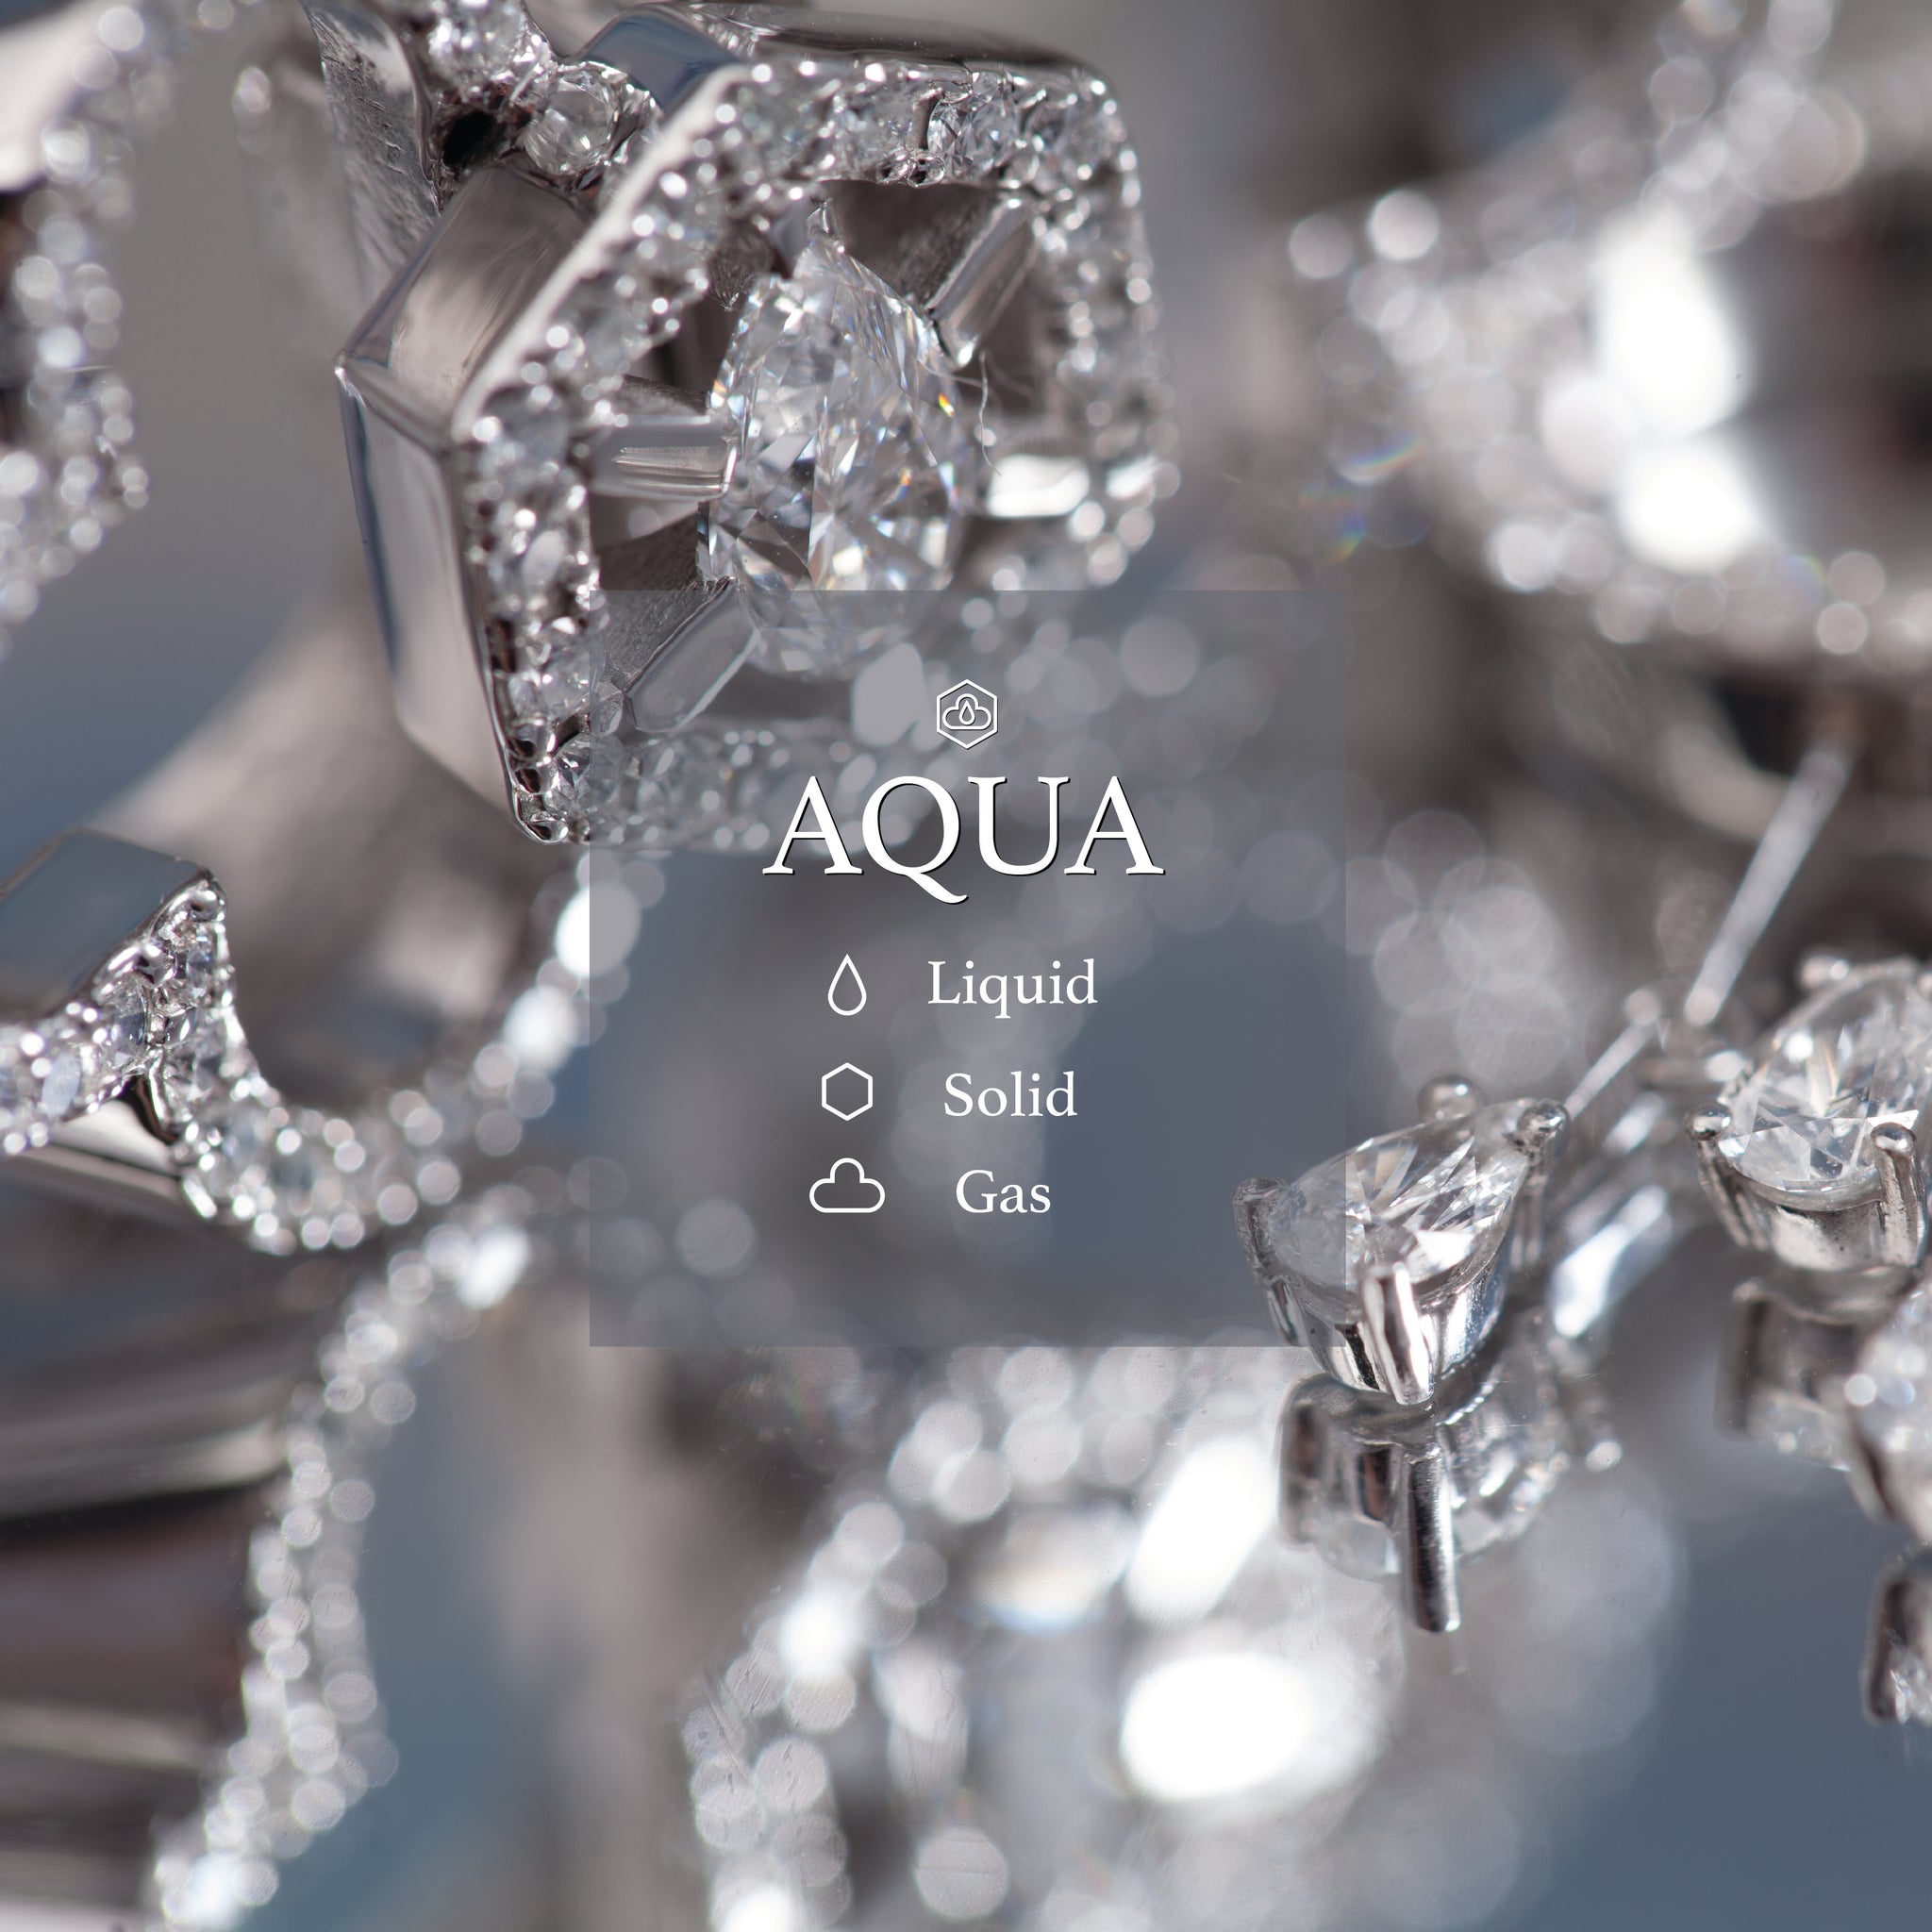 The Aqua Collection